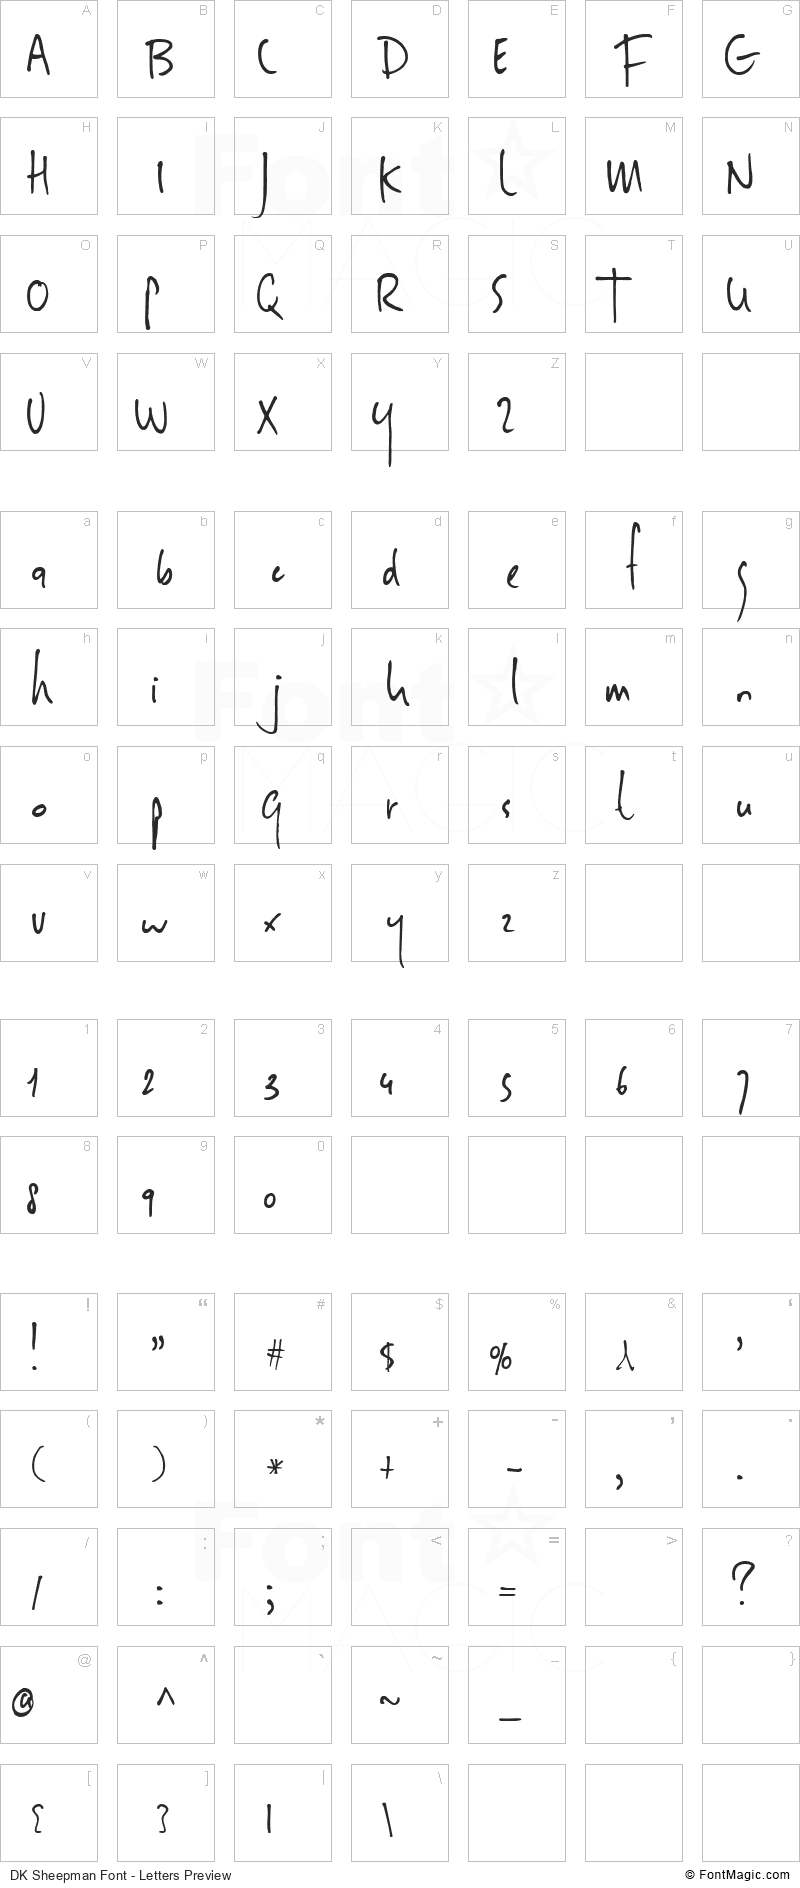 DK Sheepman Font - All Latters Preview Chart